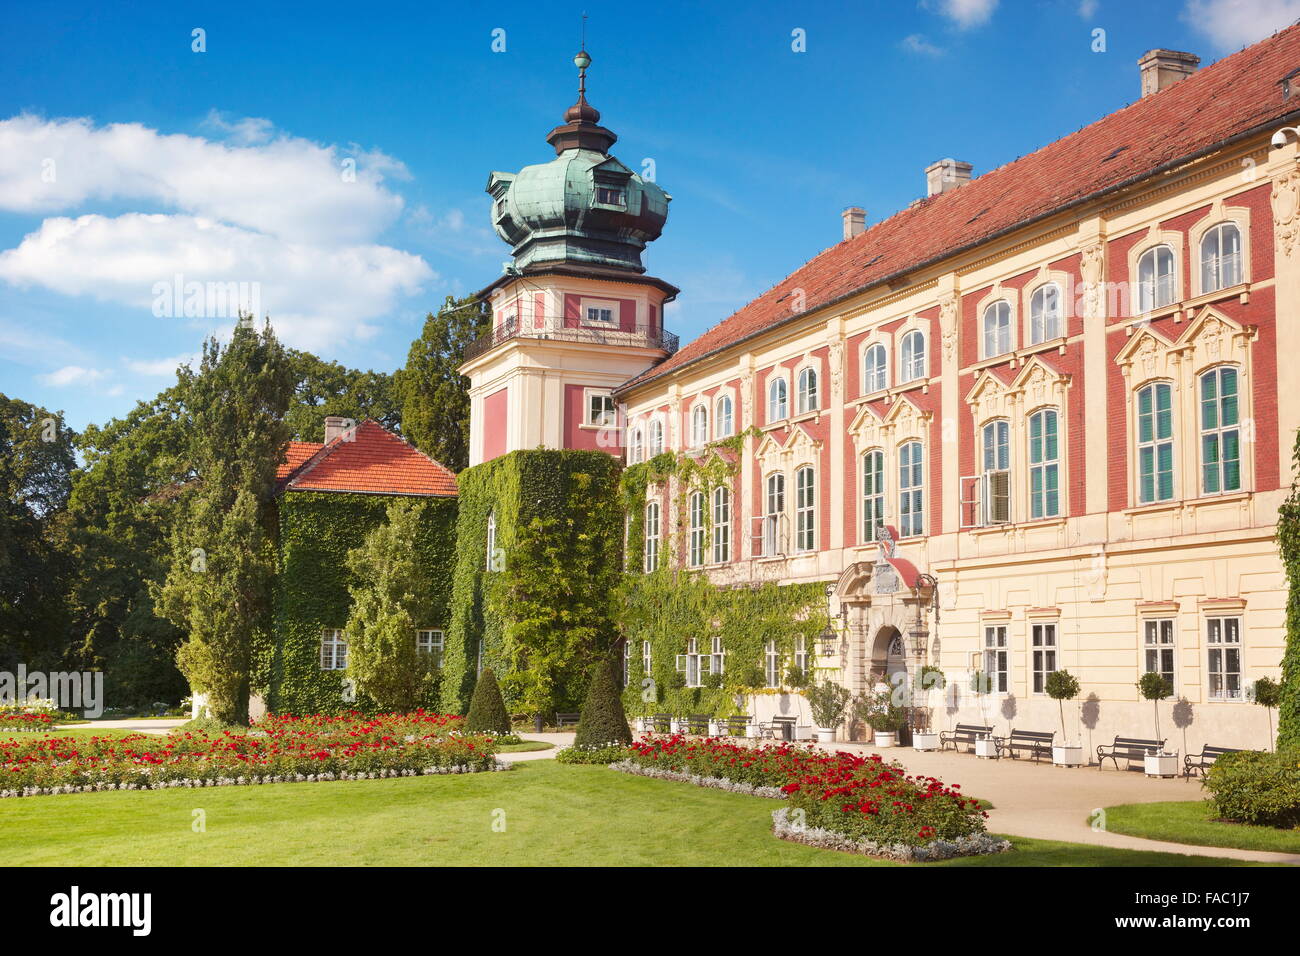 Lancut - the Royal Castle, Poland Stock Photo